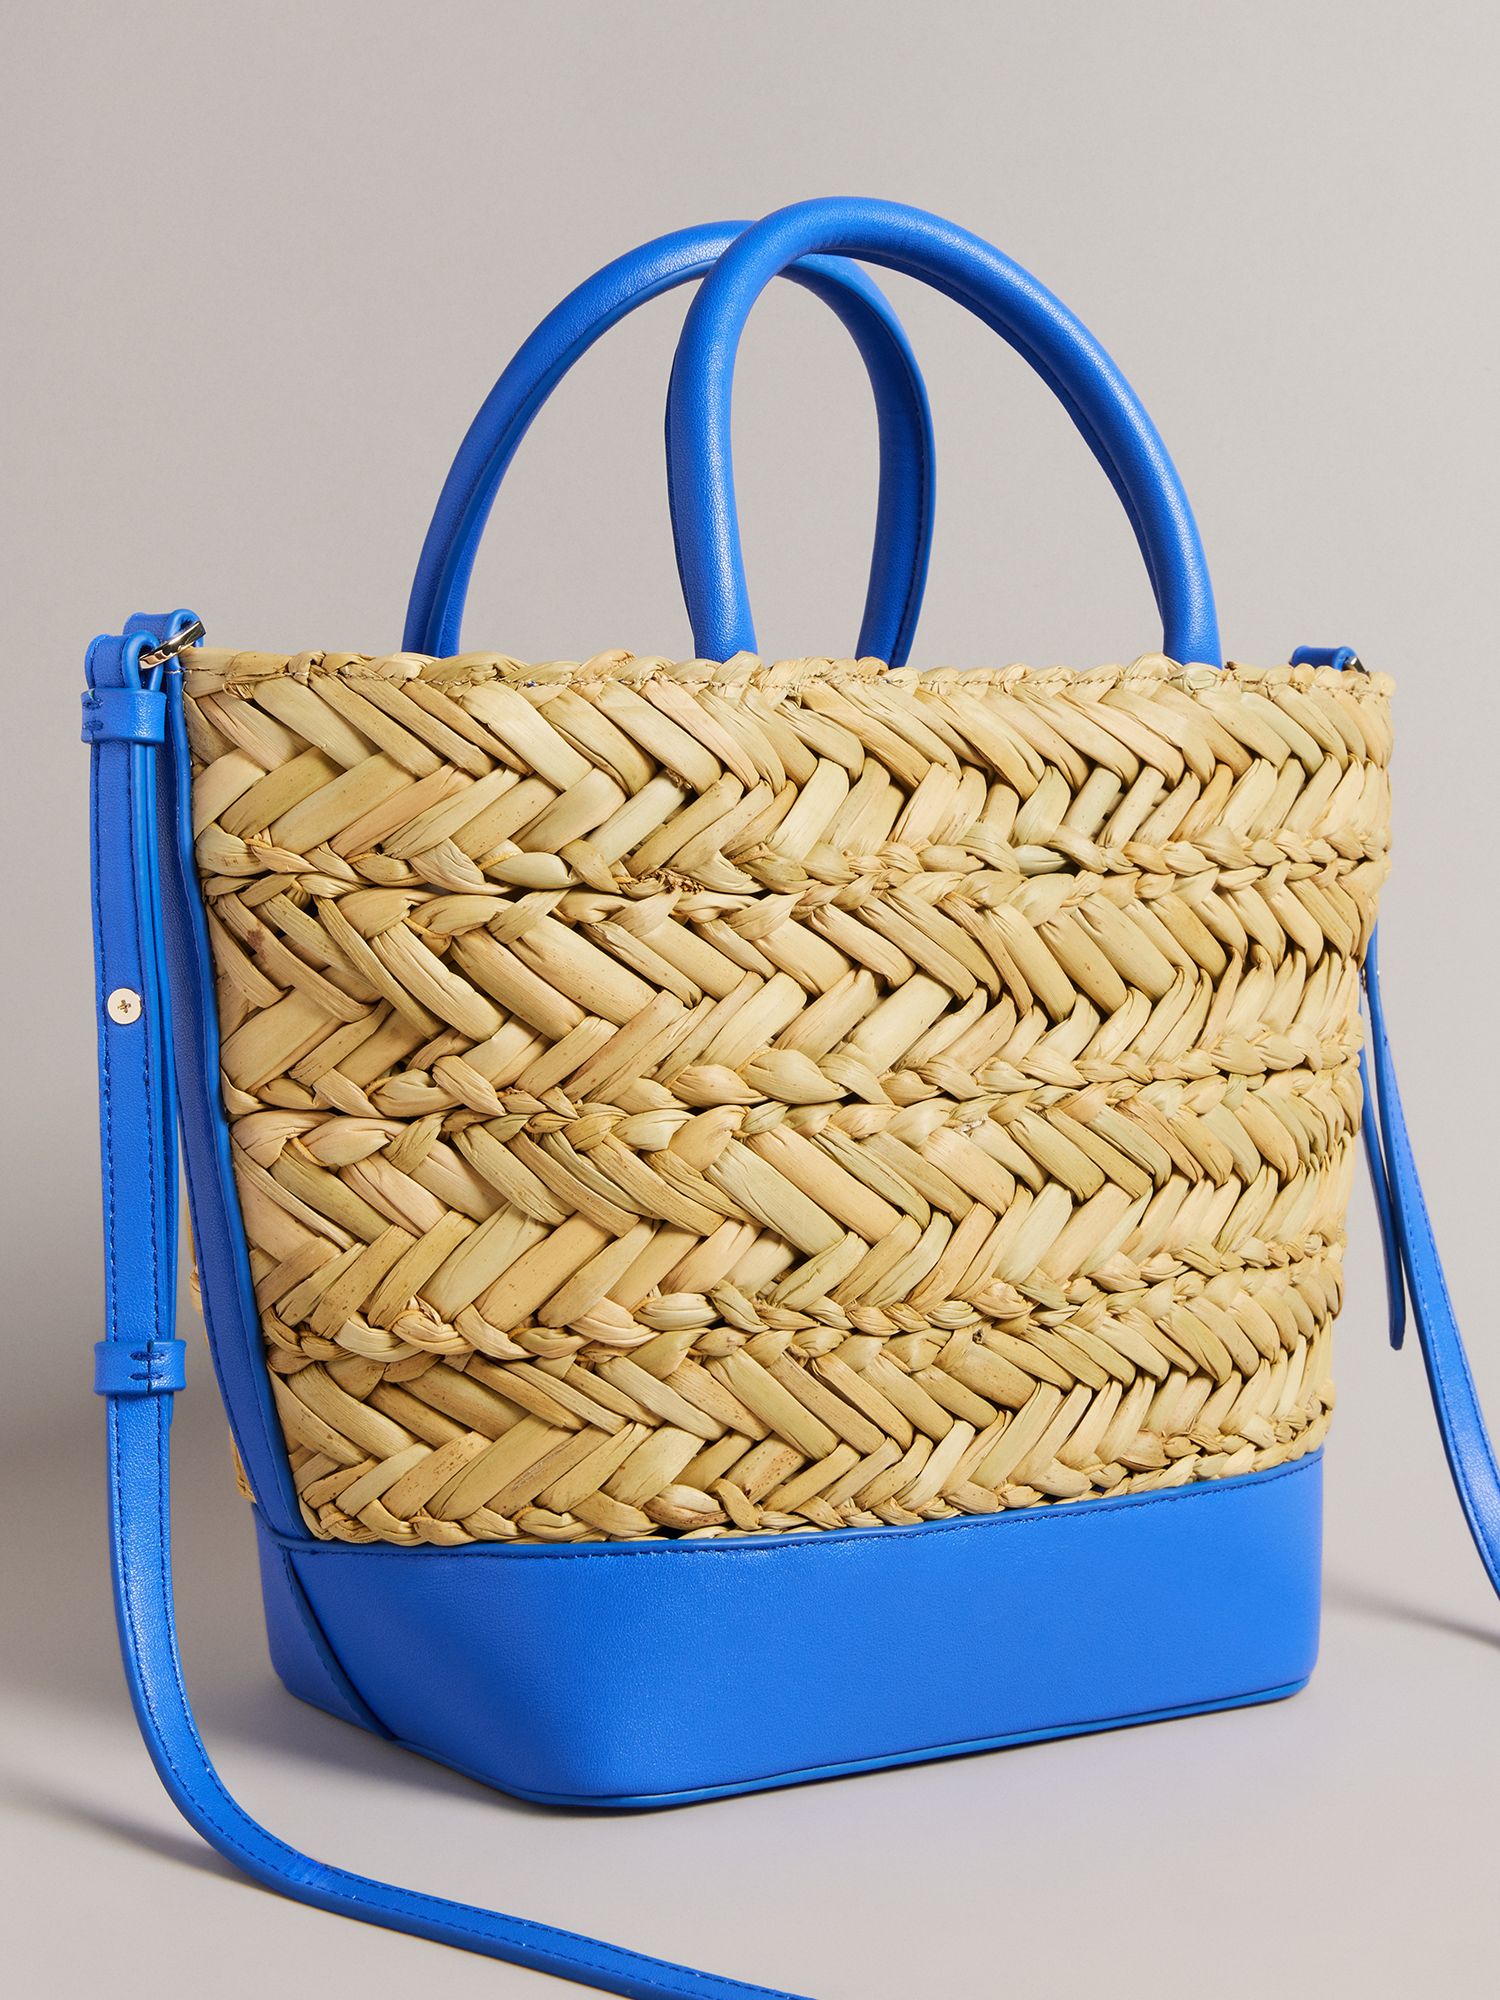 Ted Baker Ivelie Medium Raffia Weave Tote Bag, Blue Bright, One Size